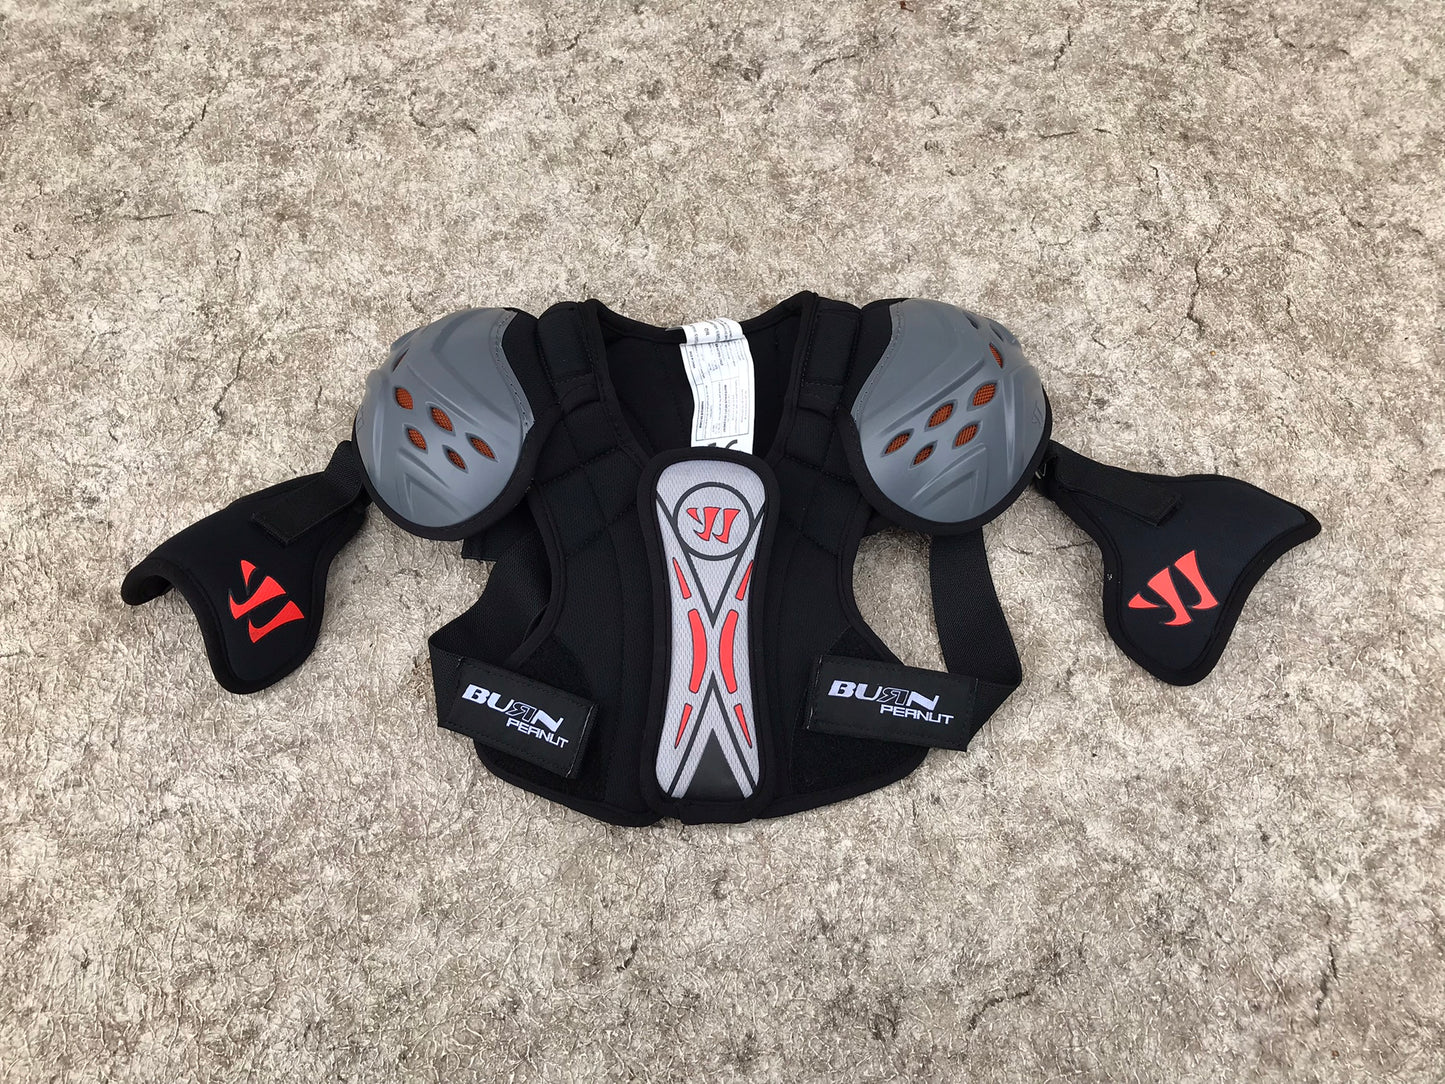 Lacrosse Shoulder Chest Pads Child Size 6-8 Warrior Peanut Black Grey New Demo